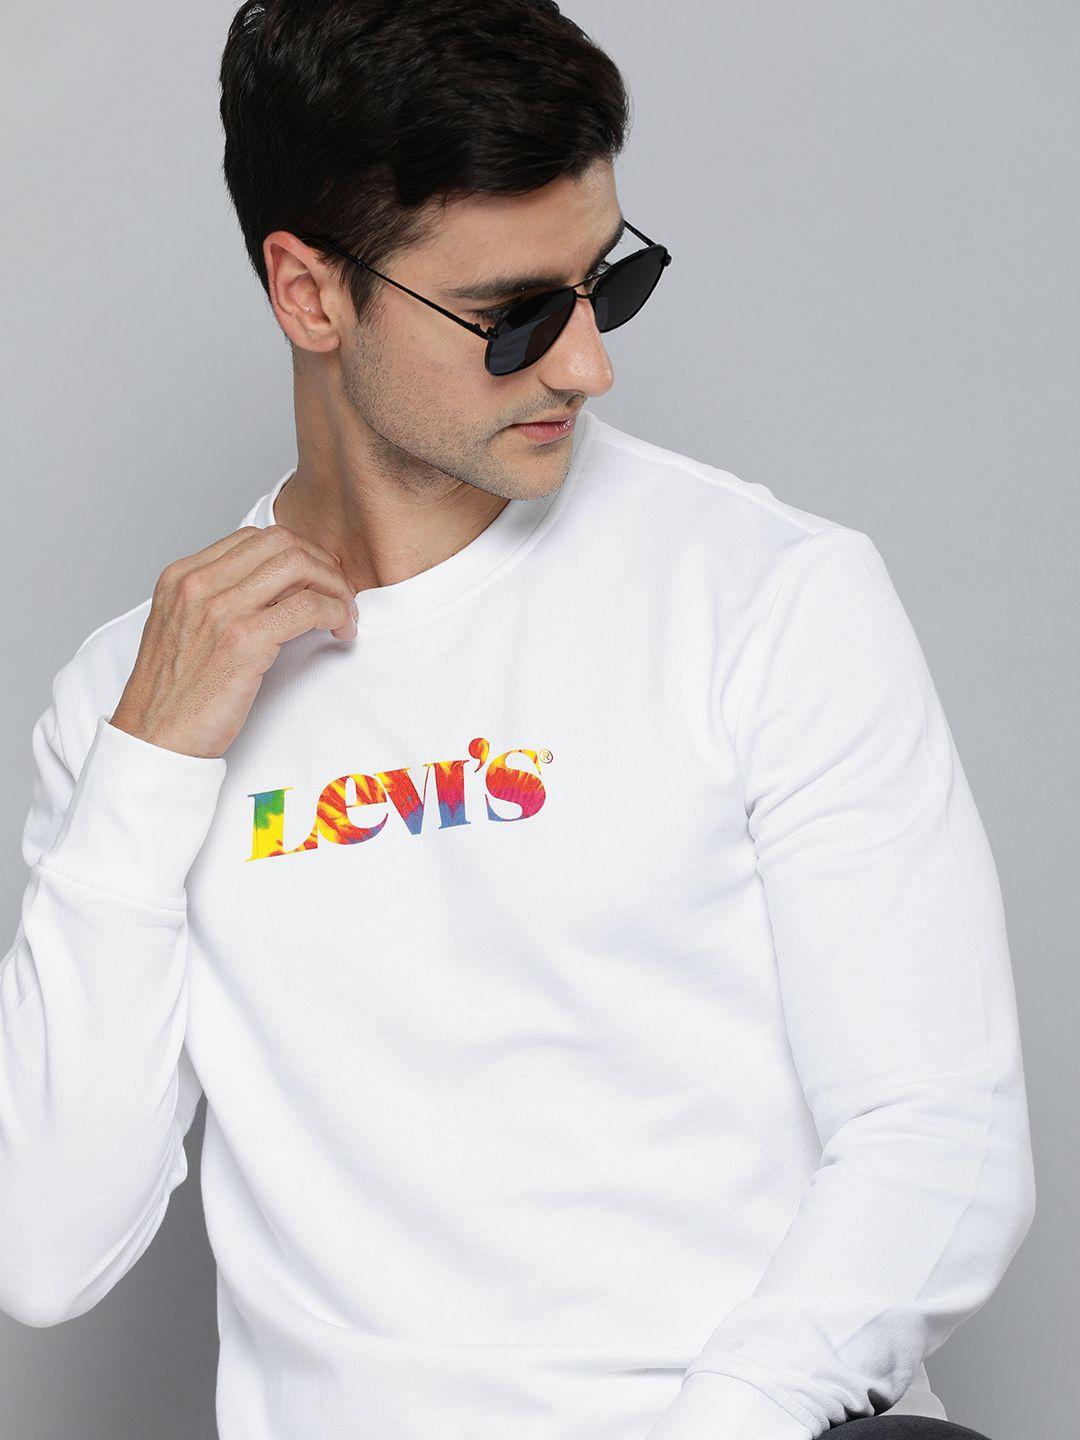 levis-men-white-brand-logo-printed-sweatshirt